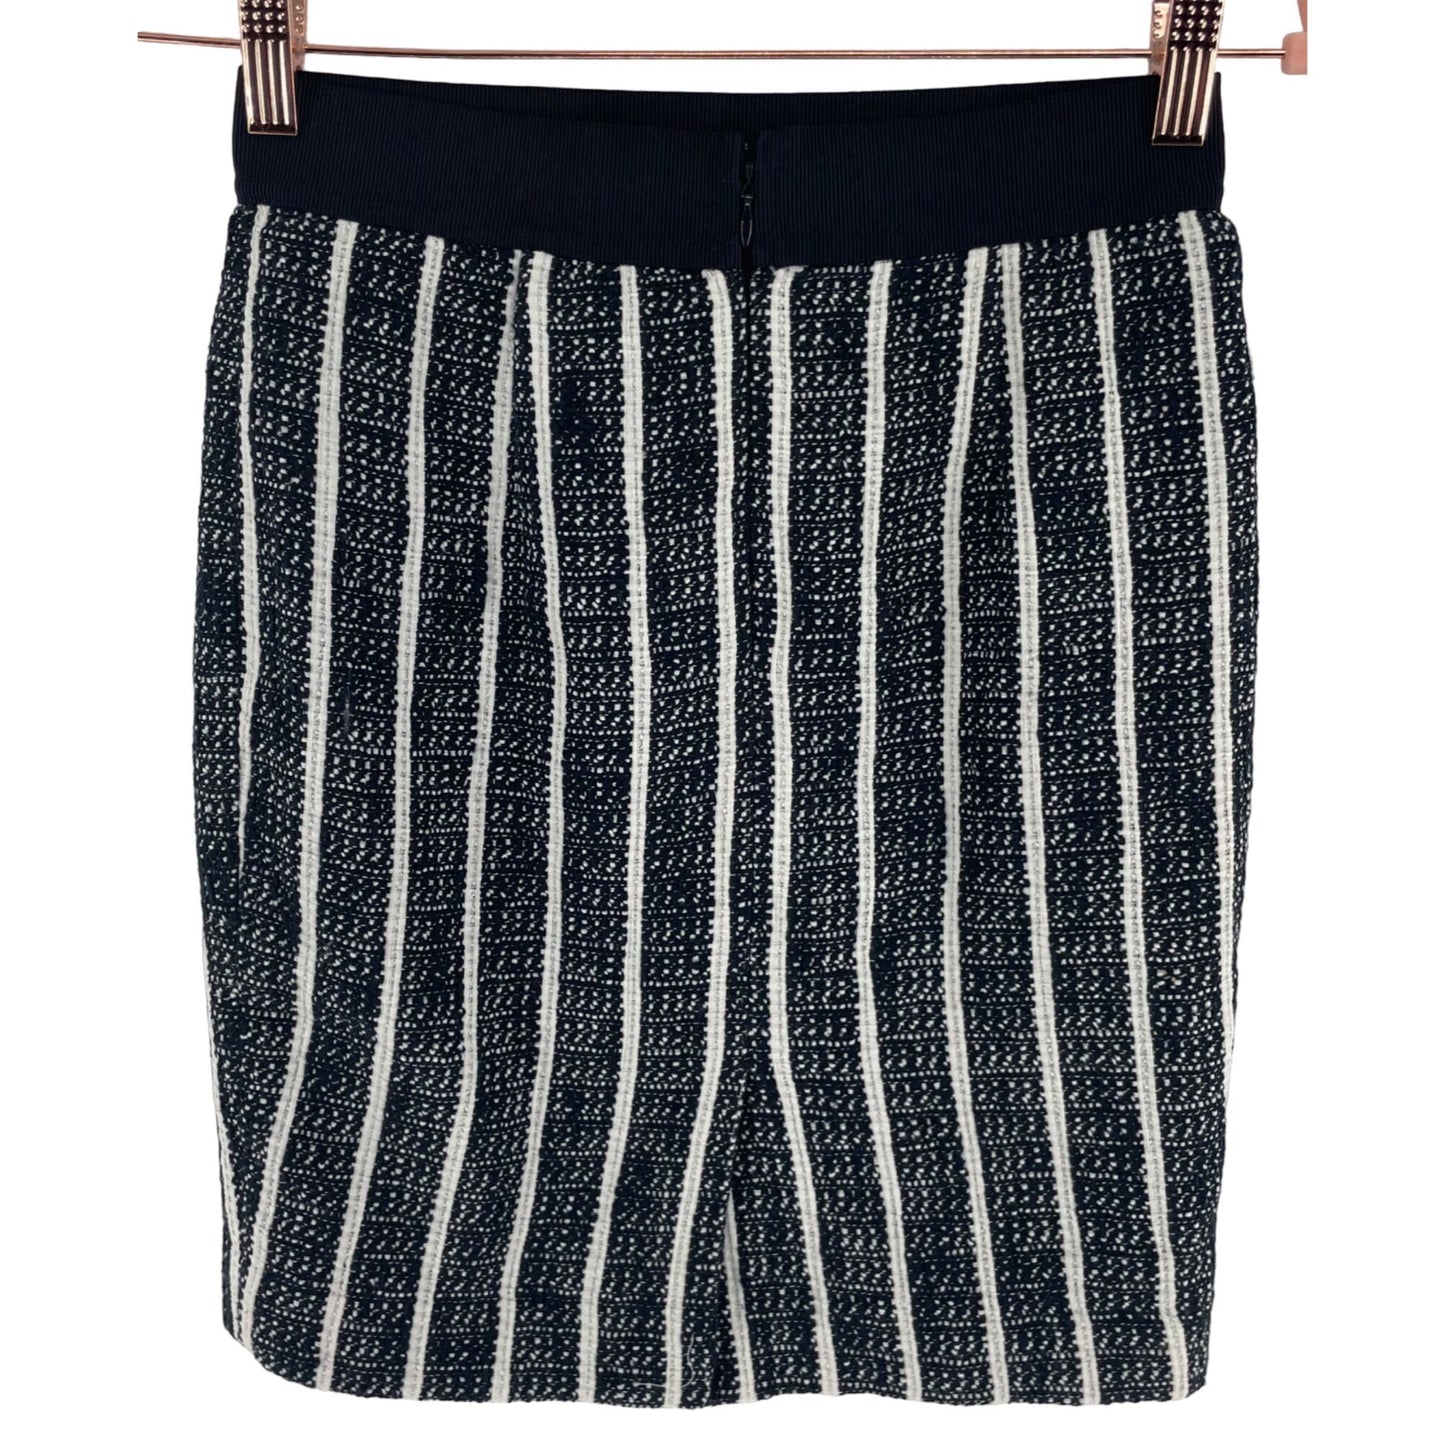 NWOT Ann Taylor Size 0P Women's Navy & White Striped Tweed Pencil Skirt